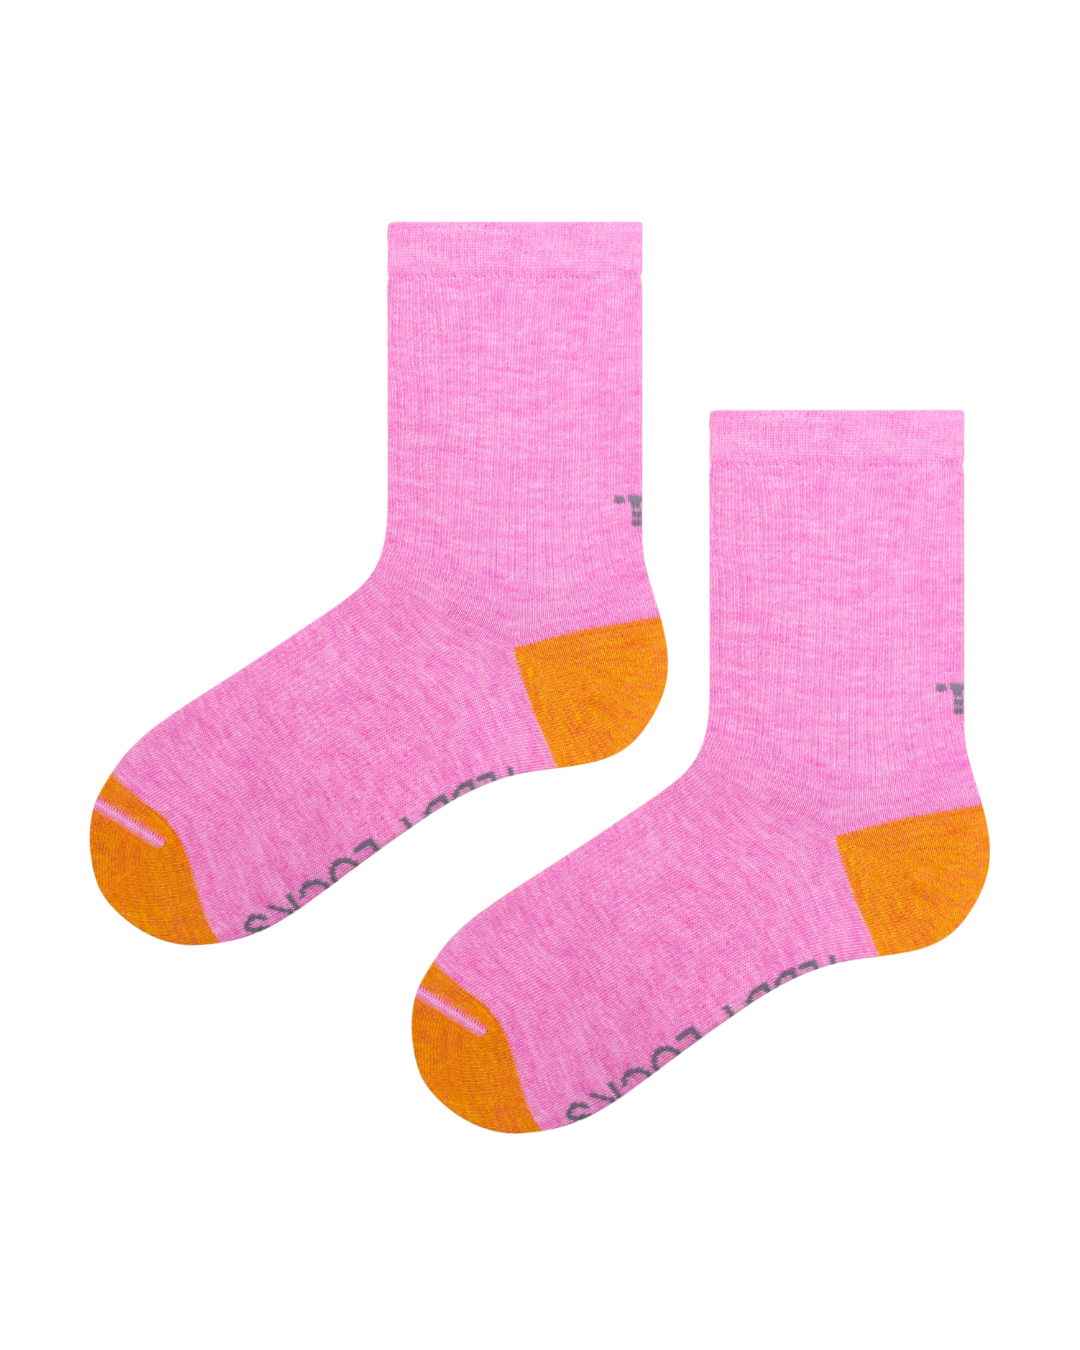 Fun ecofriendly pink ribbed sports socks. Colourful sustainable socks